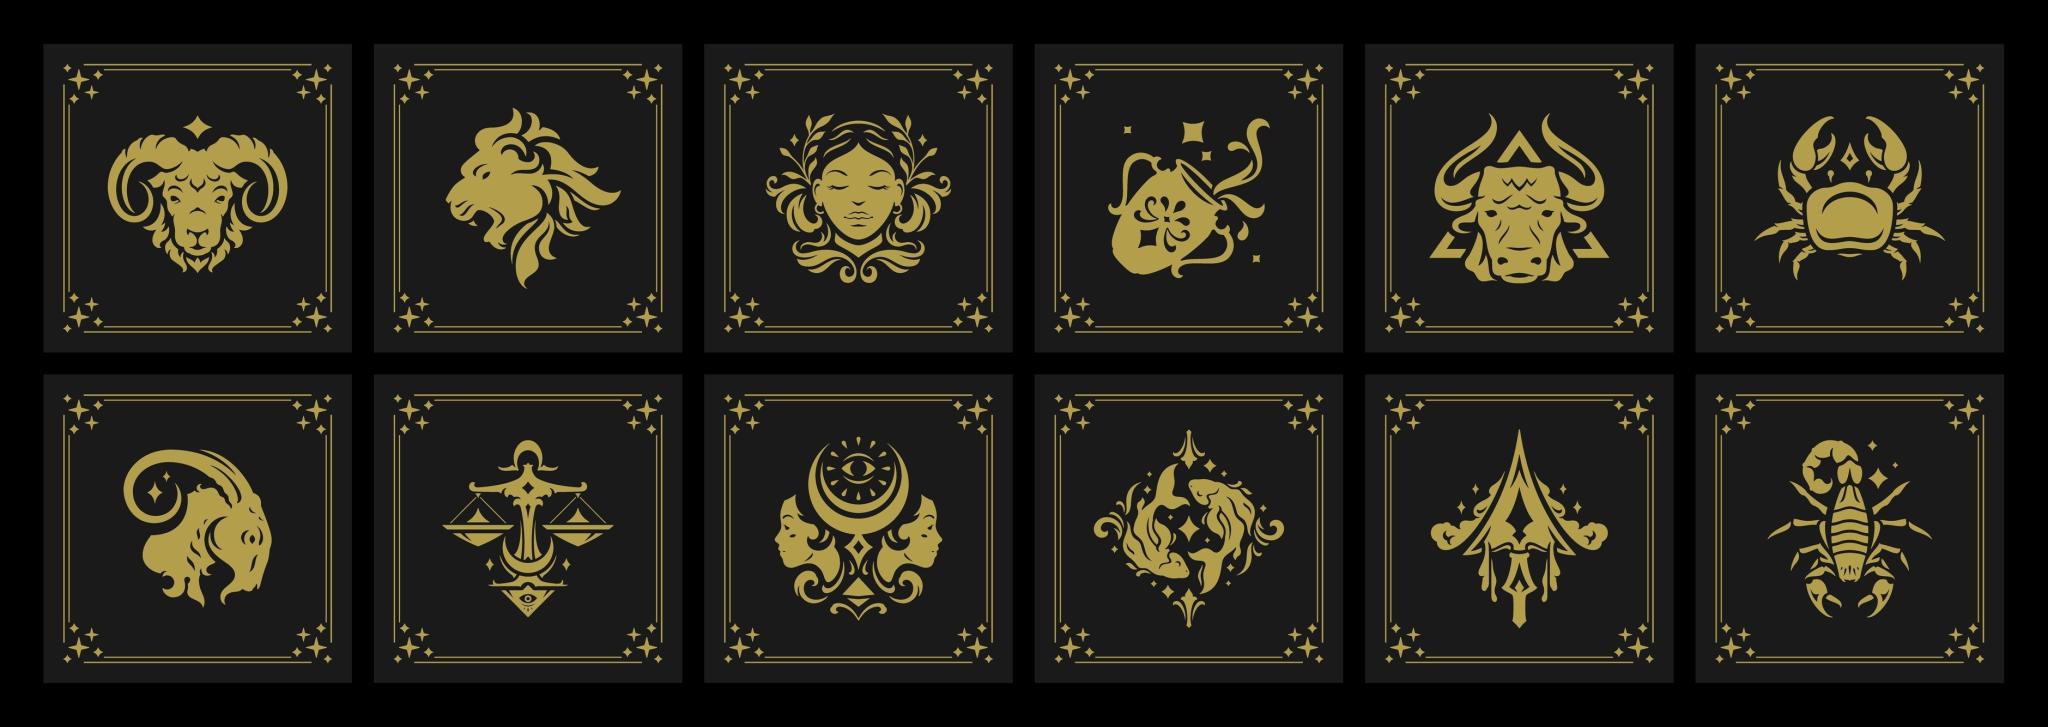 Zodiac symbols vintage golden card with antique ornate frame decorative design set vector illustration. Astrology horoscope mythology celestial esoteric lunar calendar magic fortune silhouette